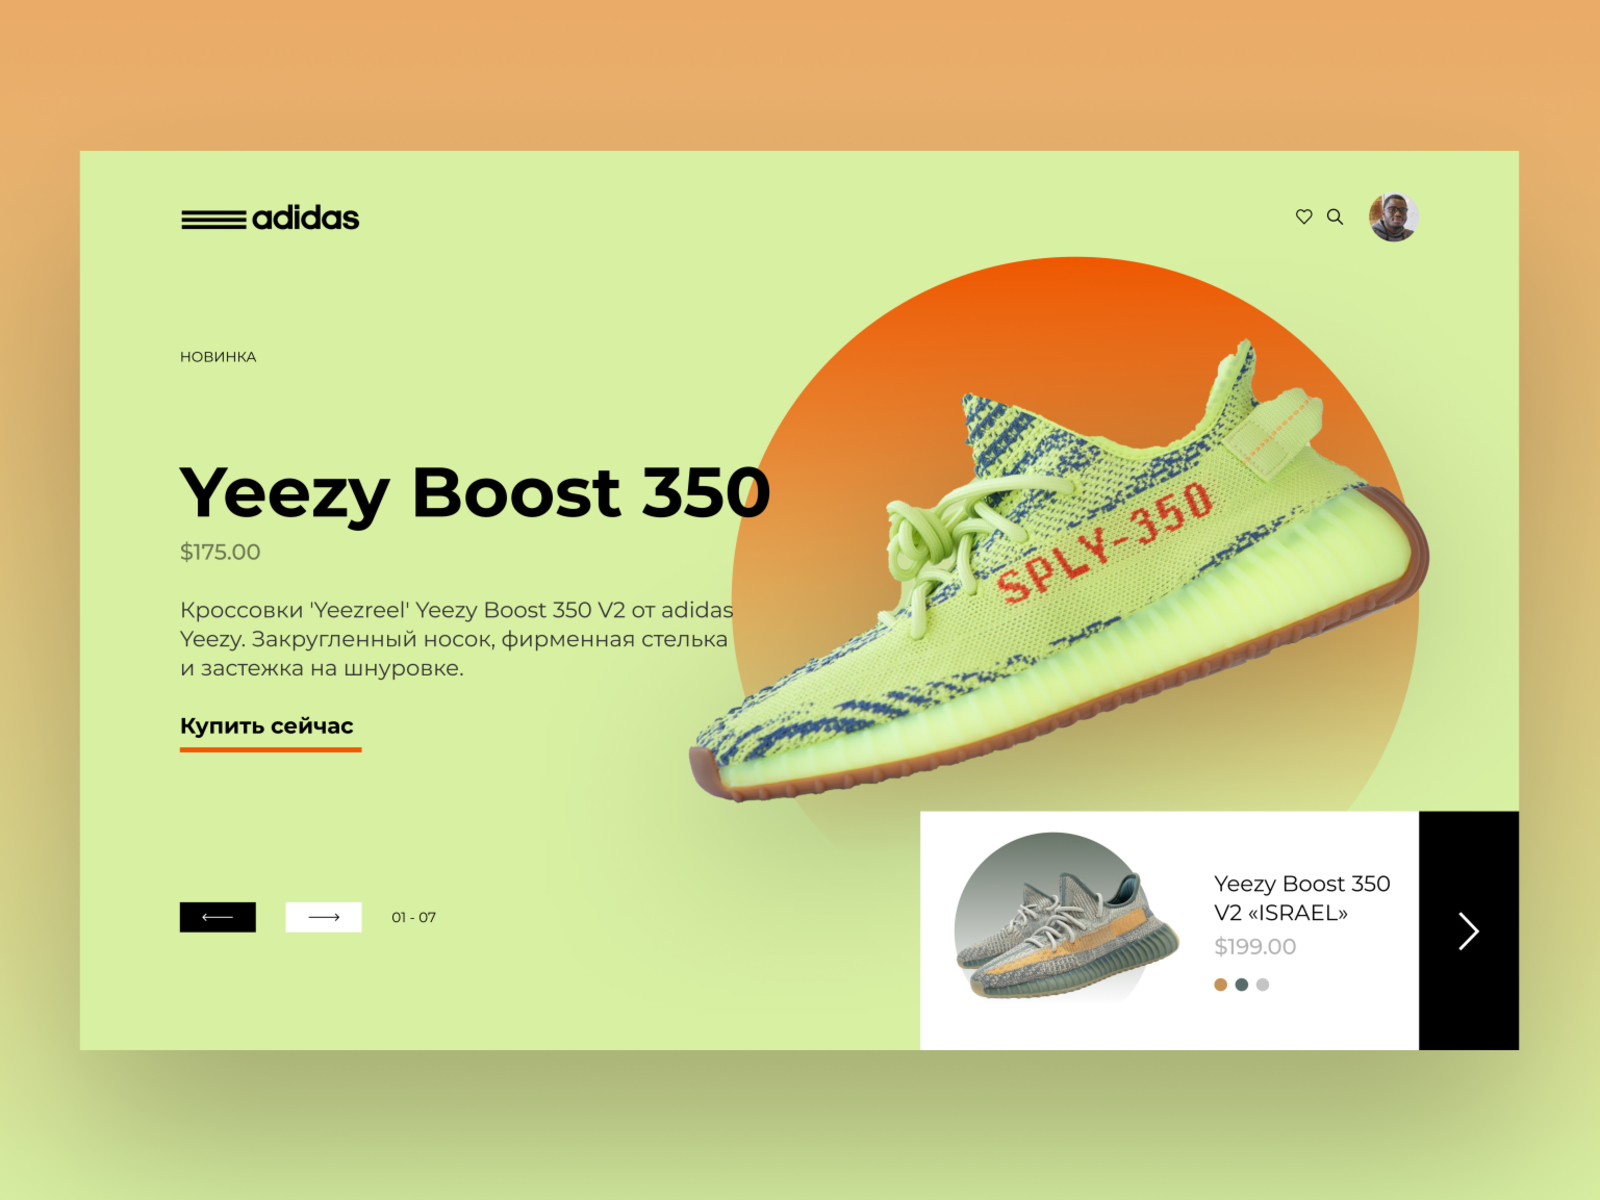 how to buy yeezy on adidas website